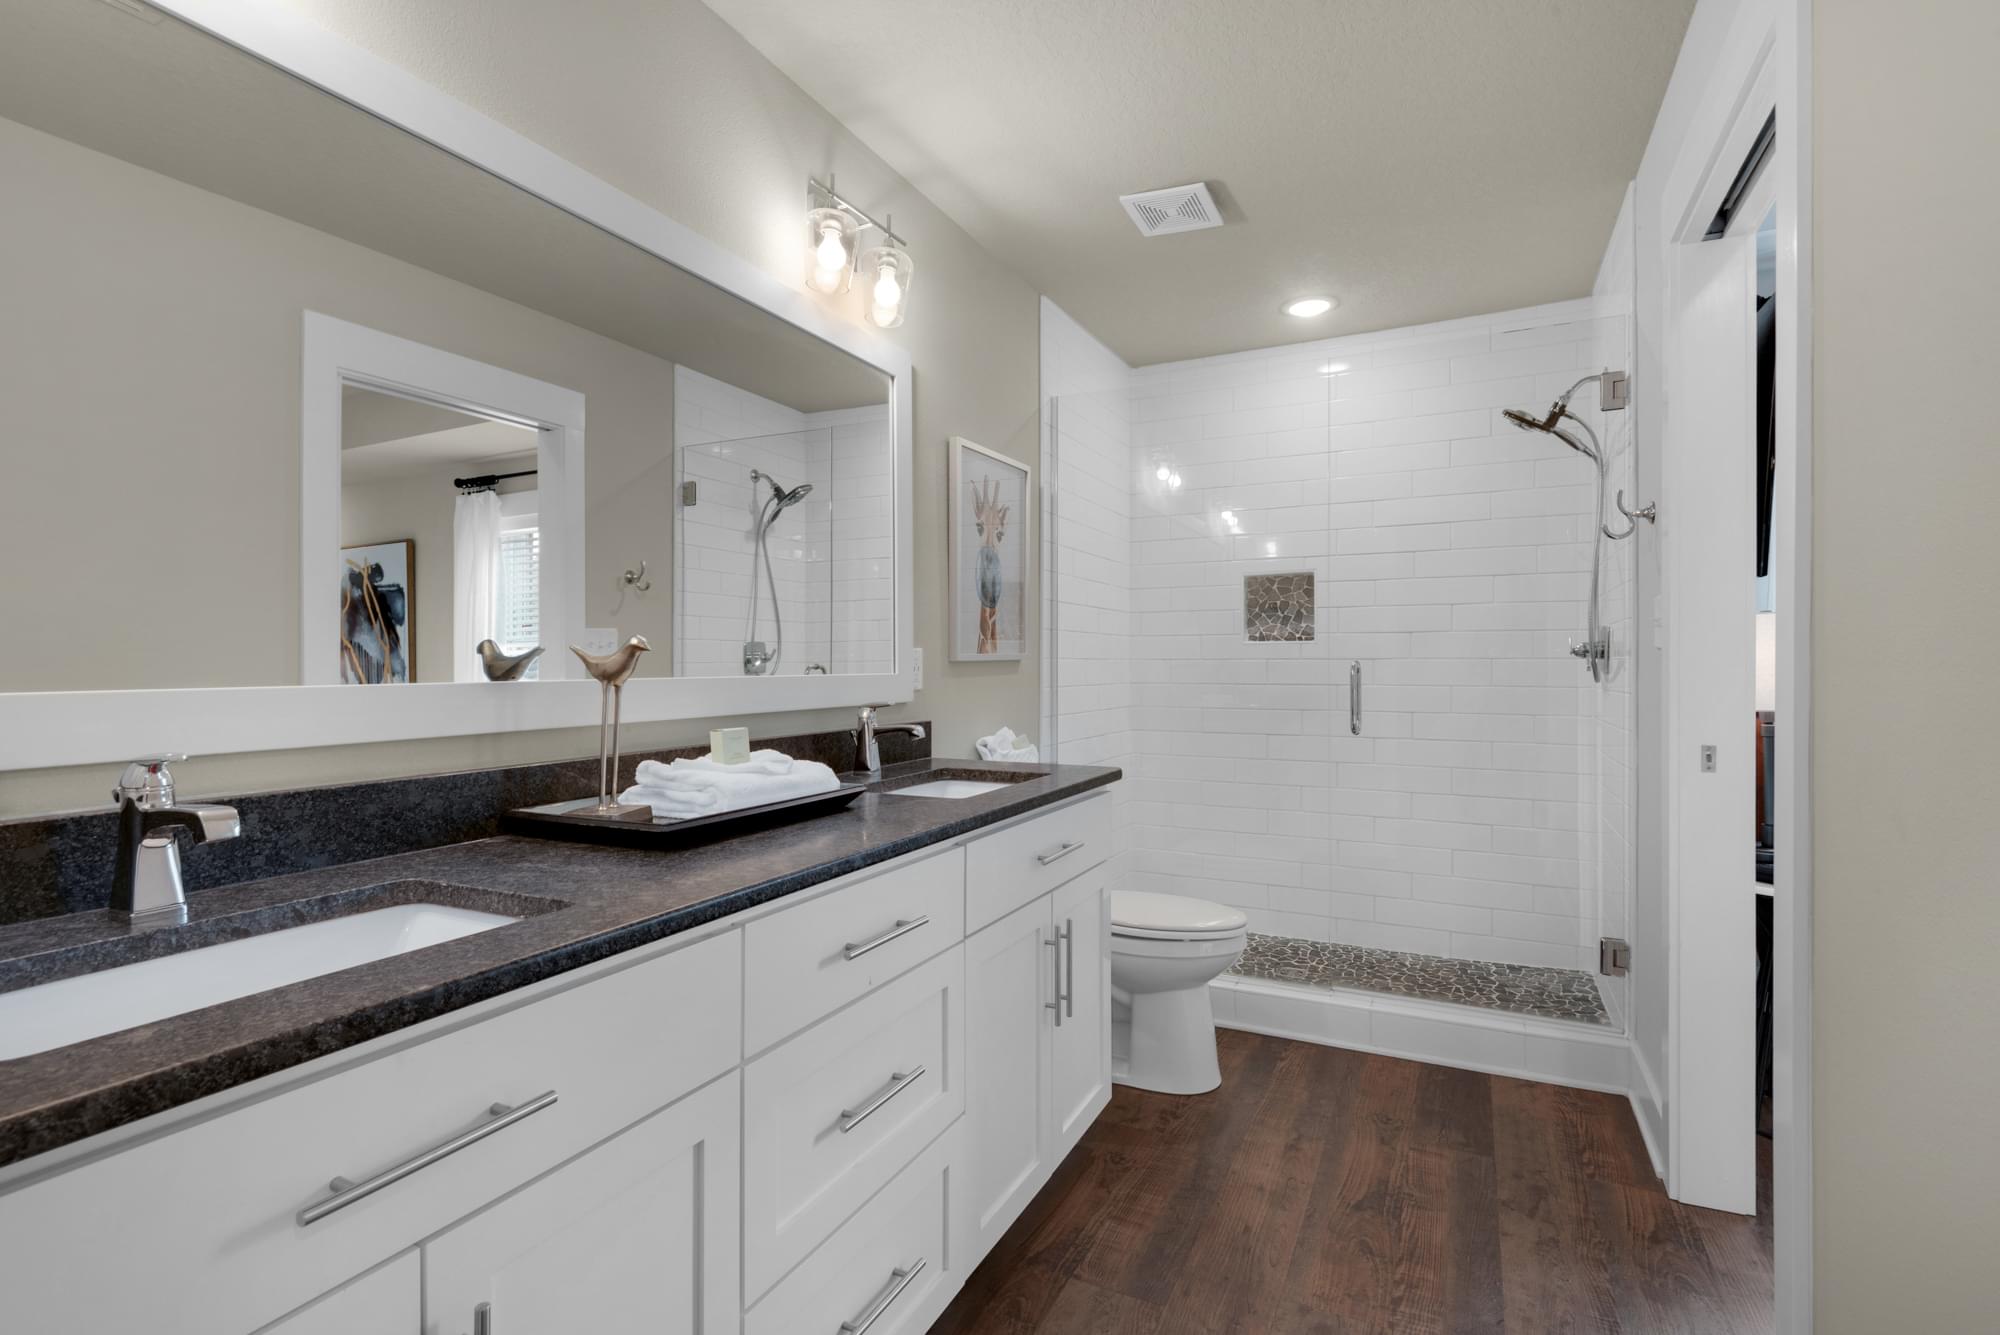 Simple, modern, elegant interior bathroom with granite tile, wood floors, and white tile.